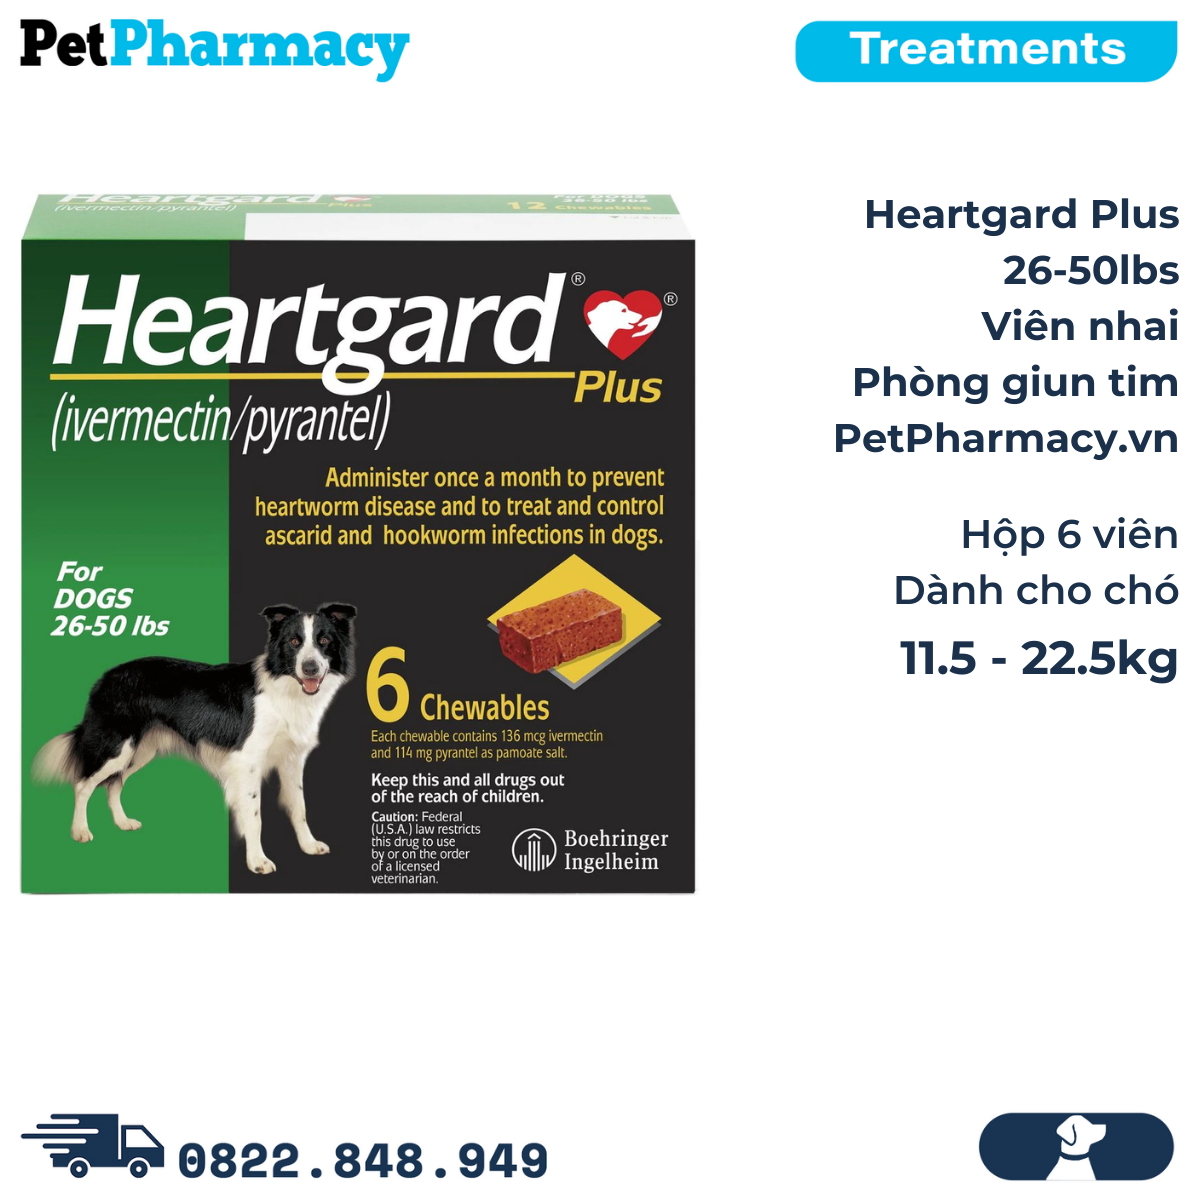 Heartgard Plus 26-50lbs - Viên nhai phòng Giun tim chó 11.5-22.5kg